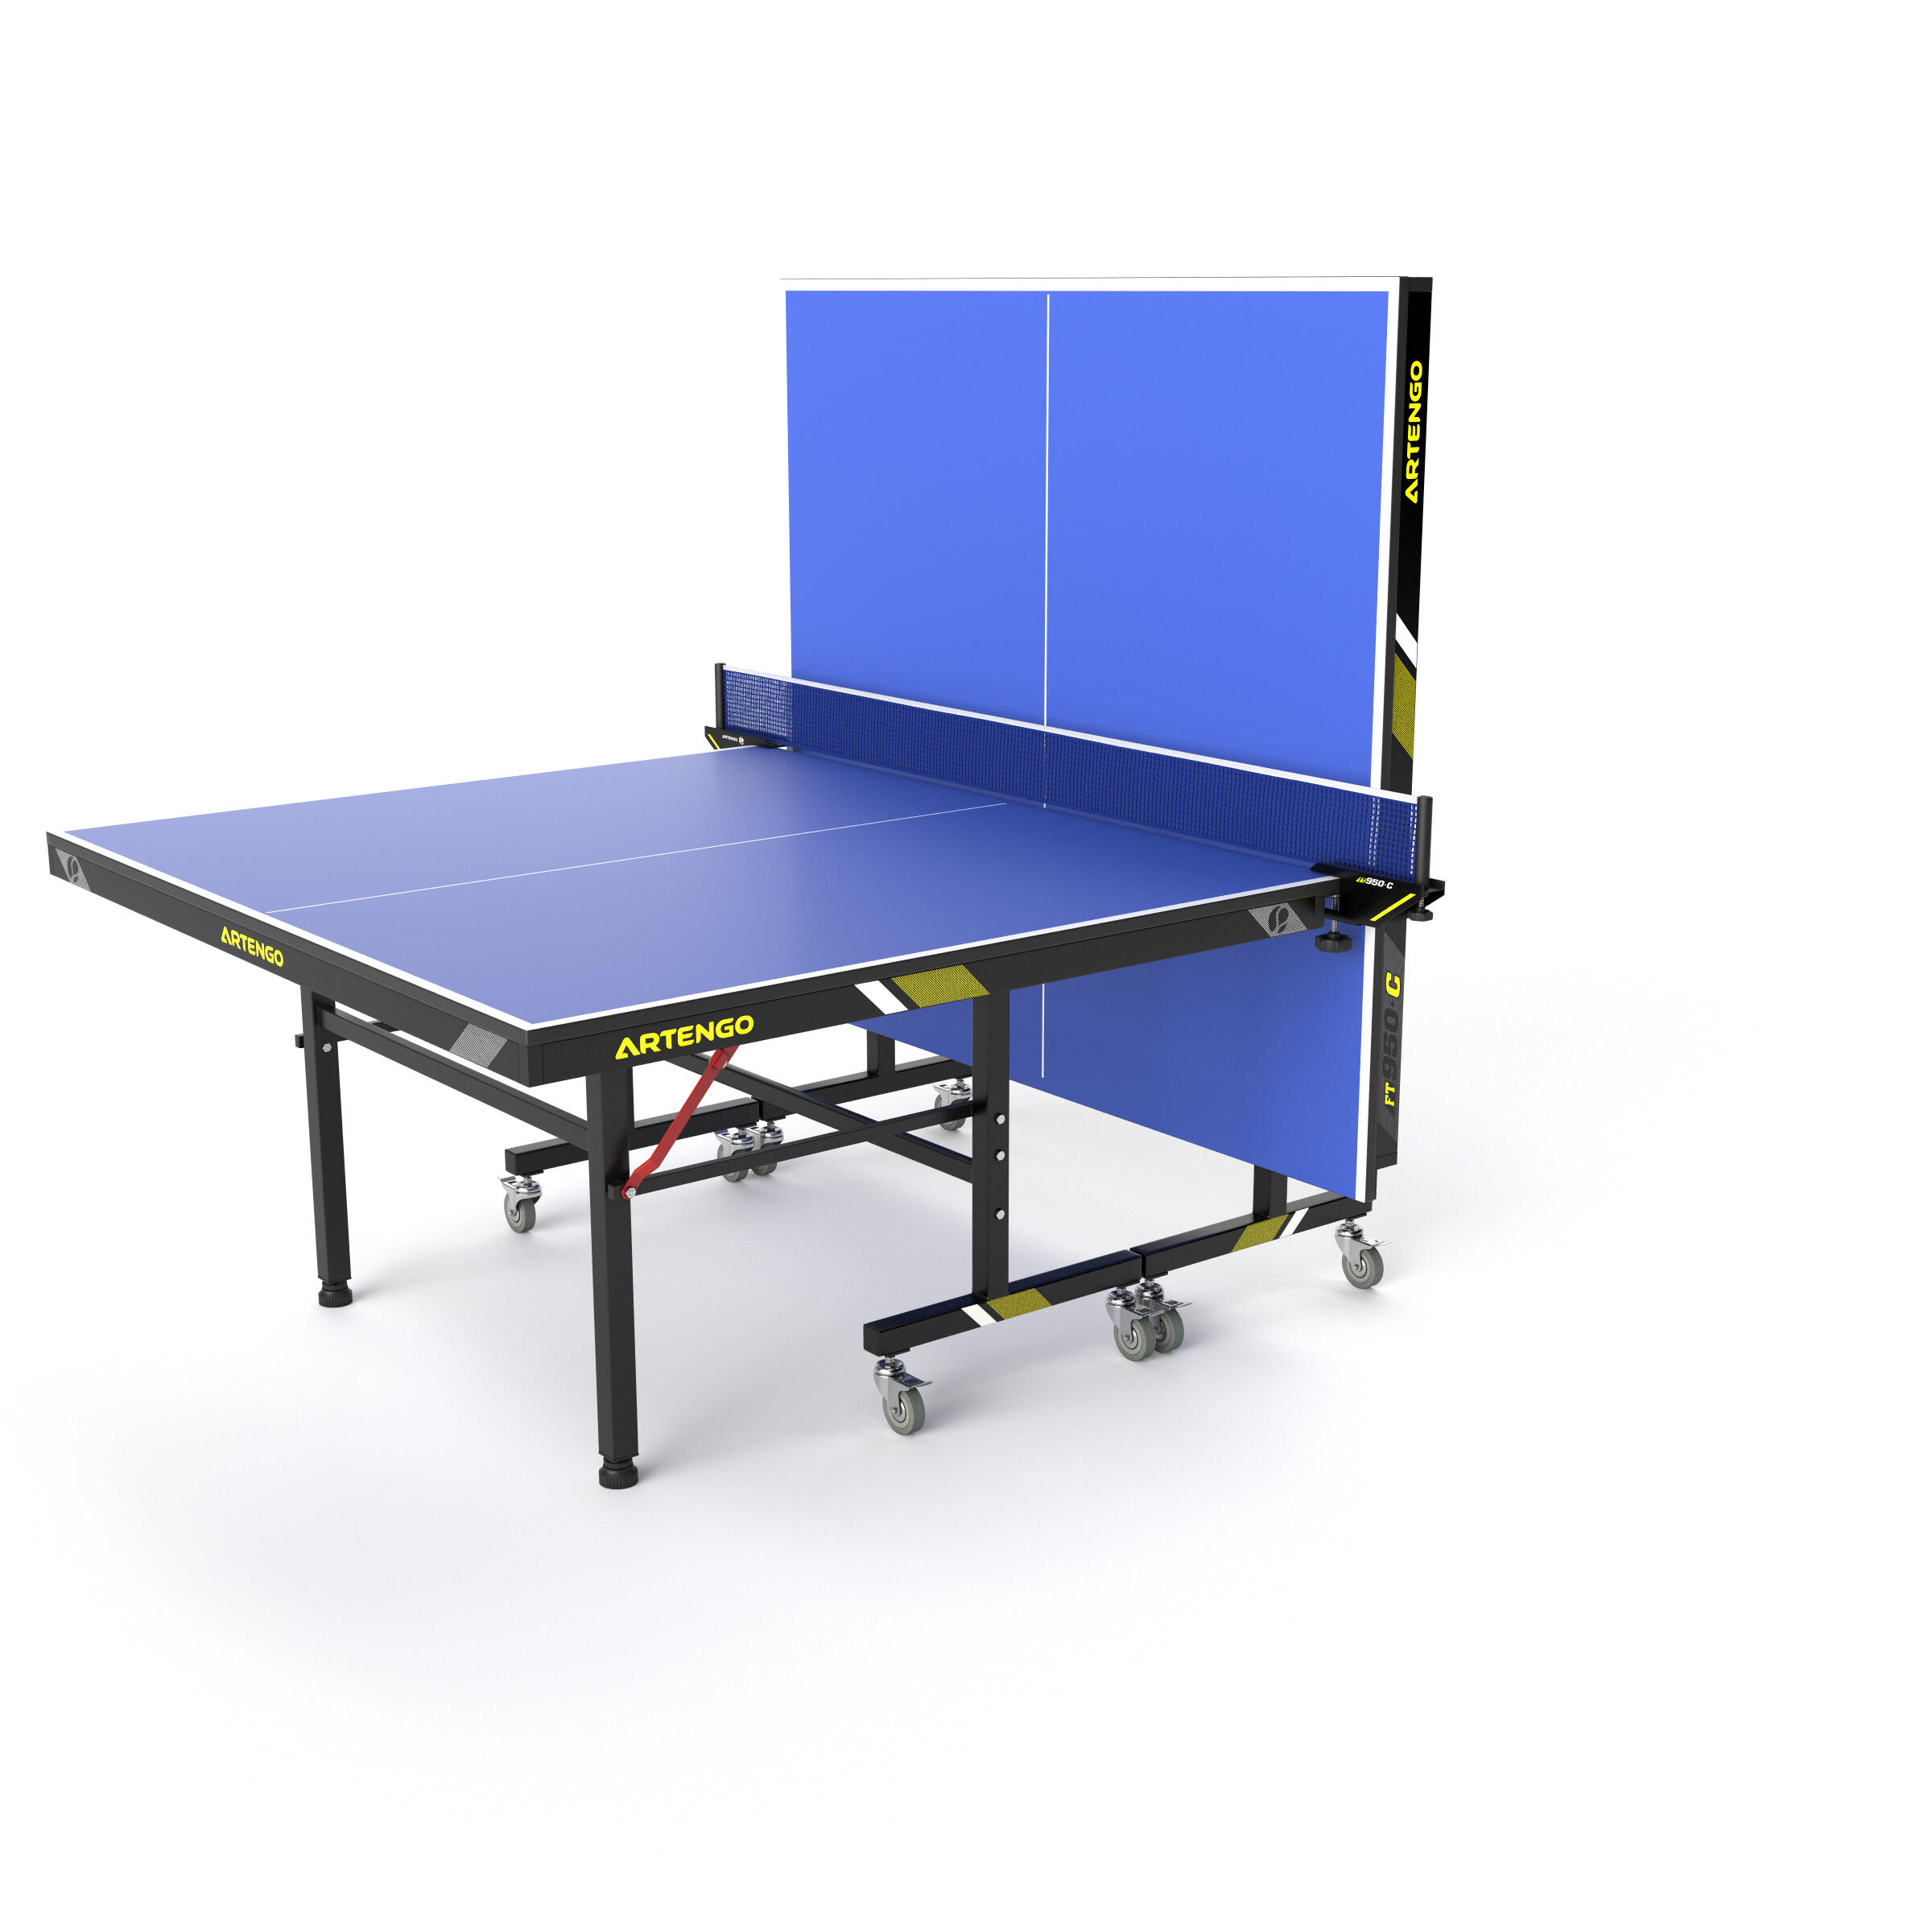 ping pong set decathlon